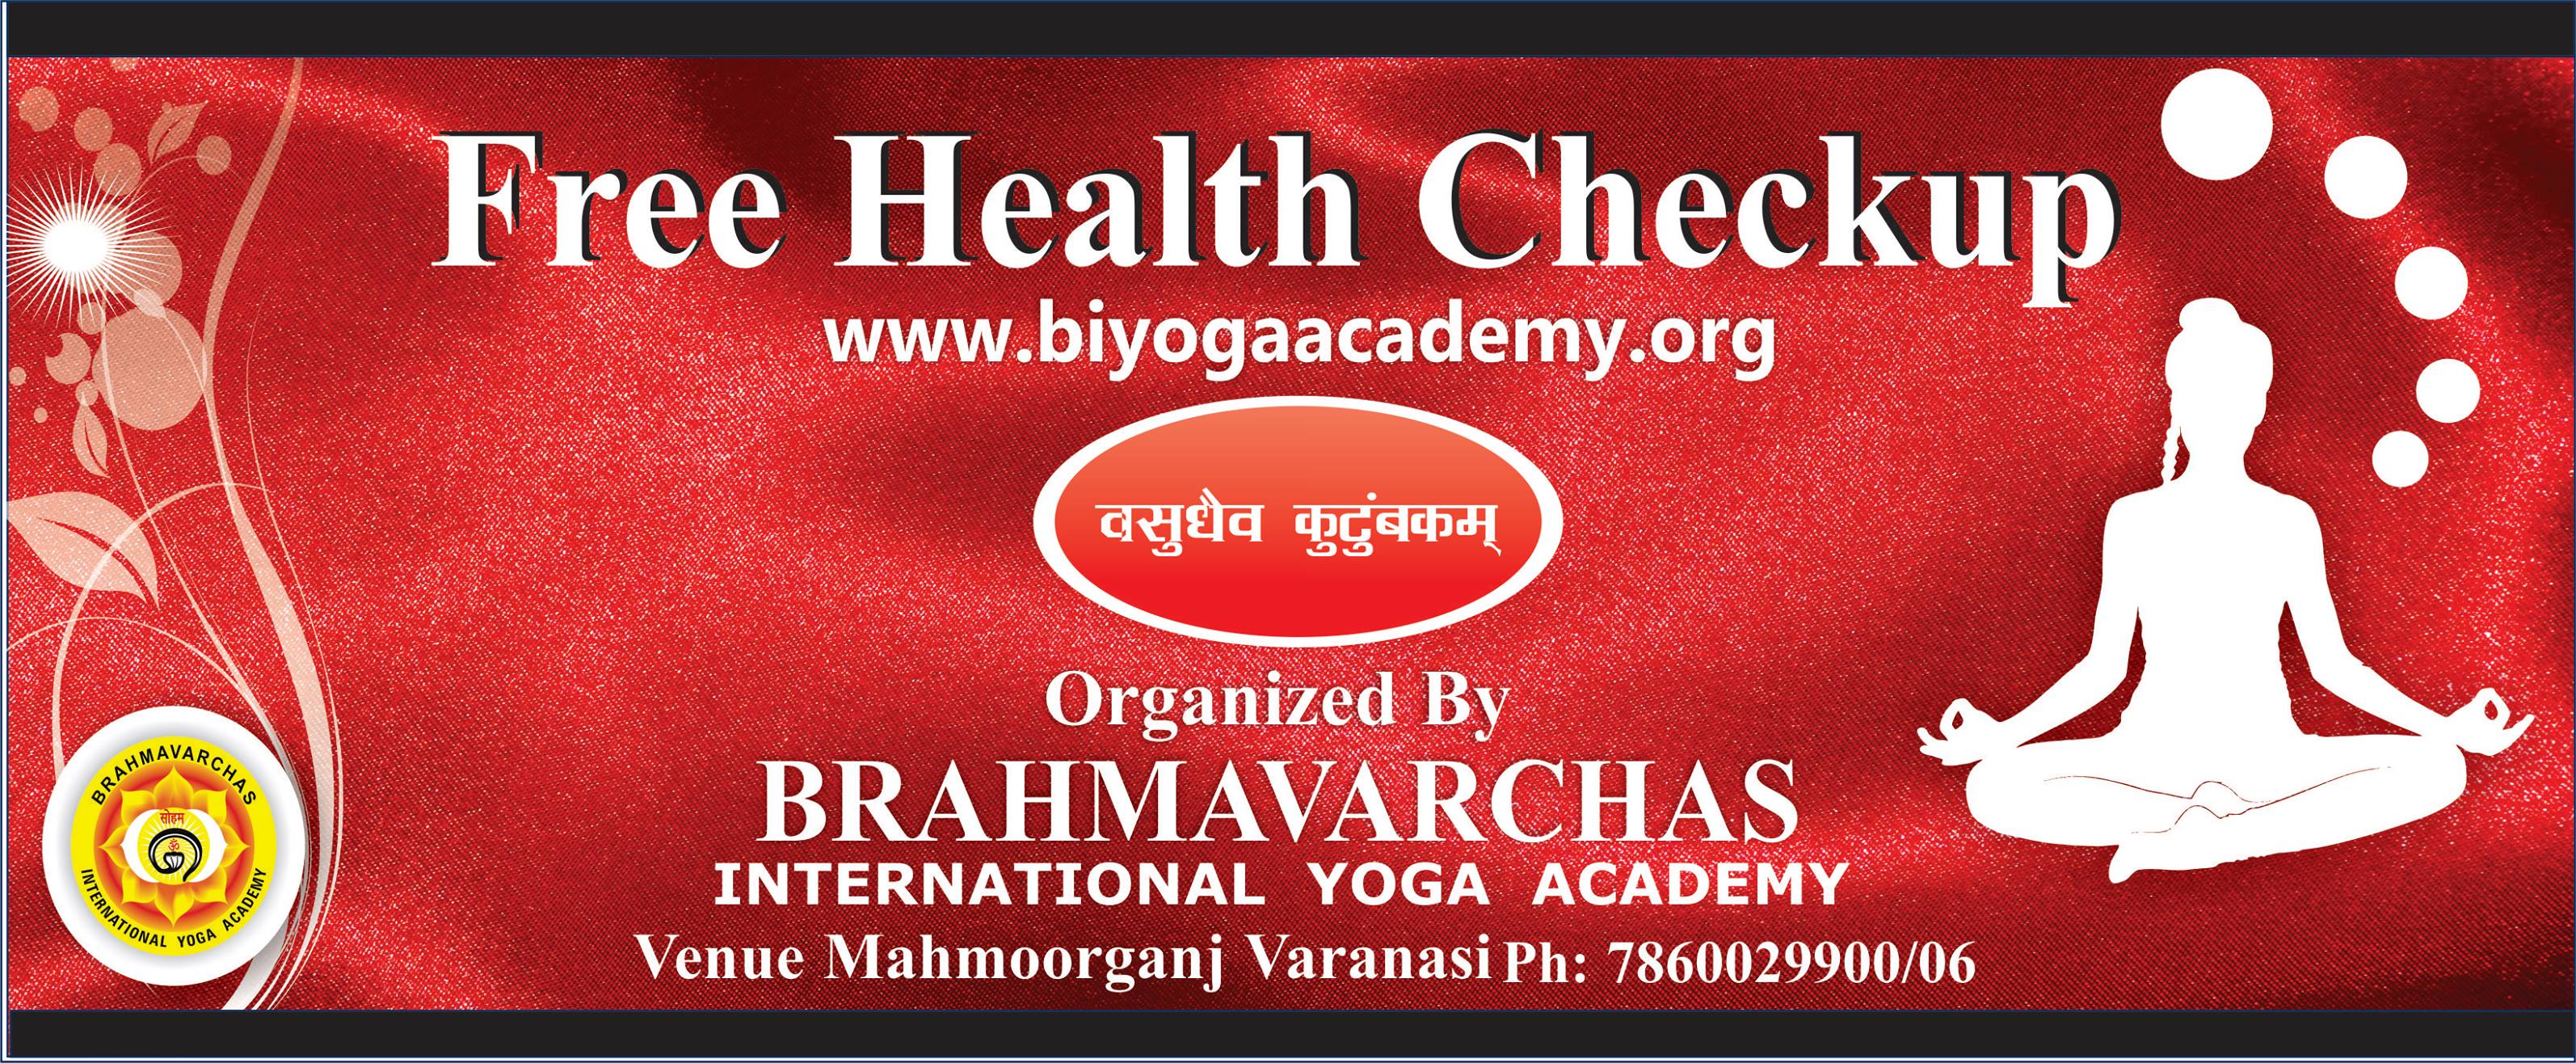 Brahmavarchas International Yoga Academy 